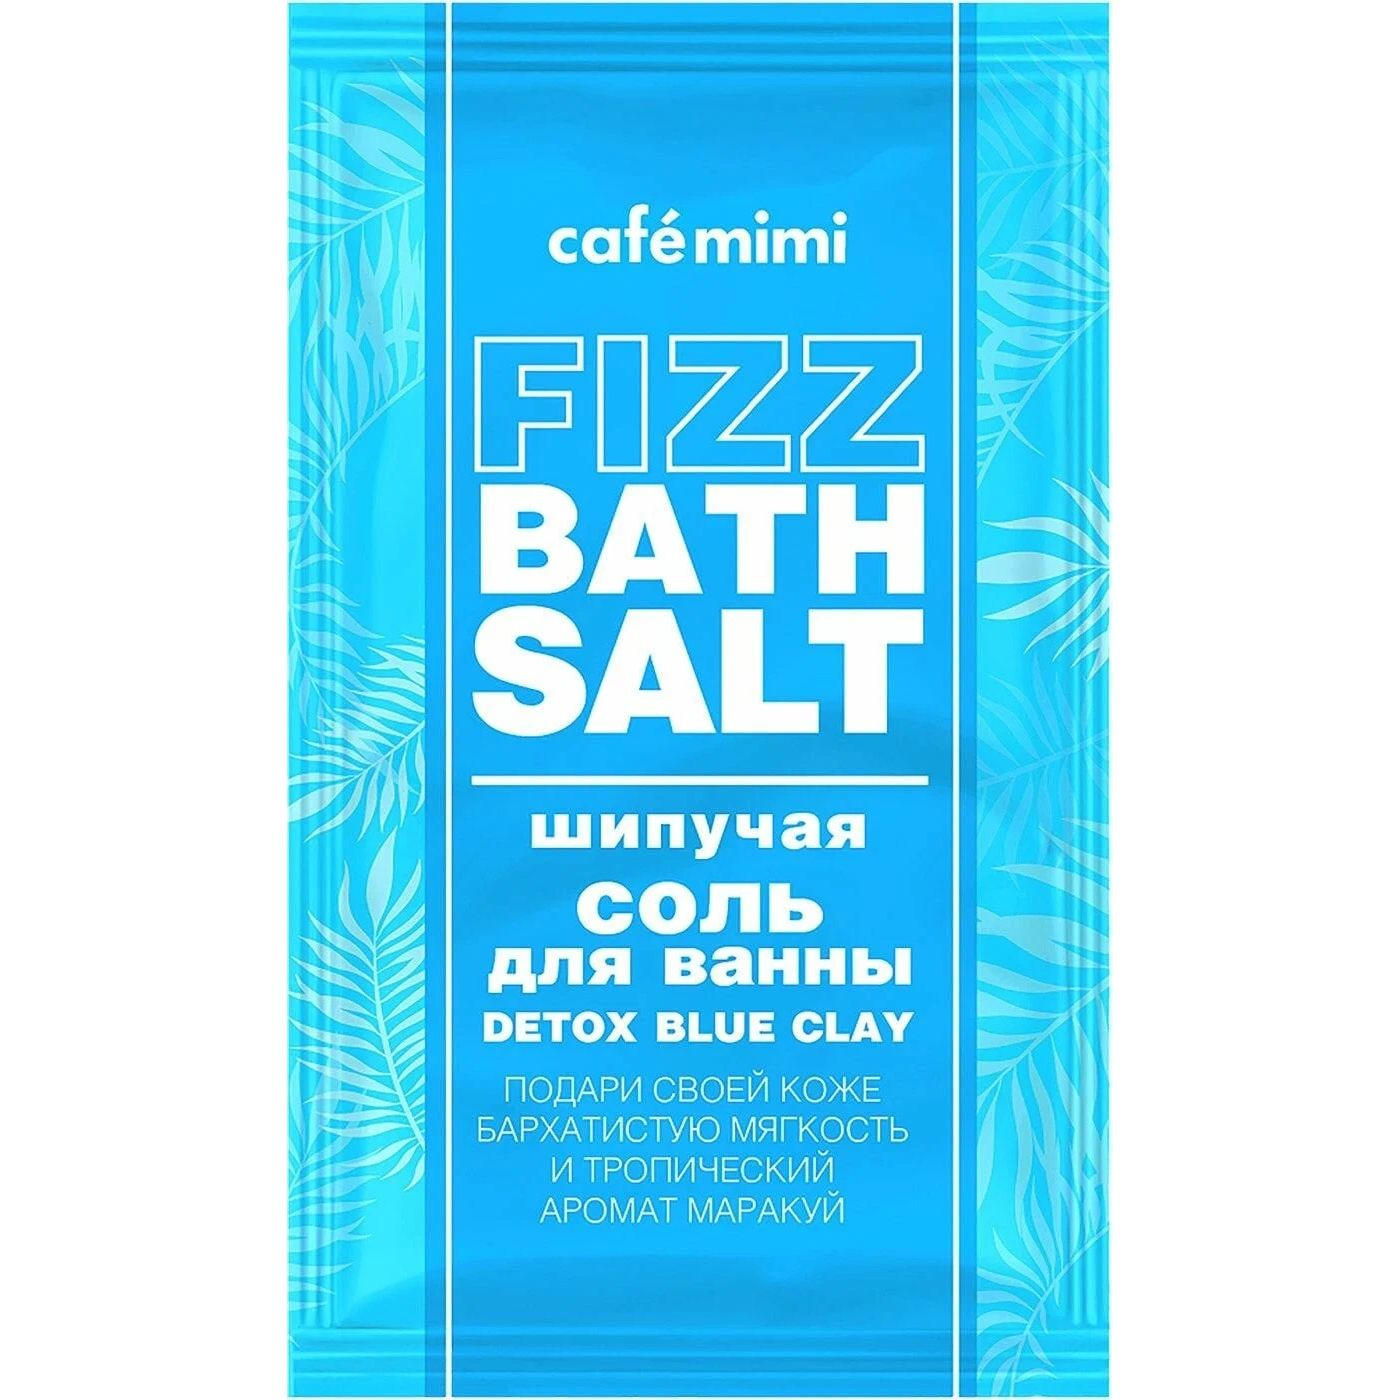 Соль для ванн Cafemimi Fizz Bath Salt Detox Blue Clay шипучая, 100 г соль для ванн cafemimi fizz bath salt relax шипучая 100 г